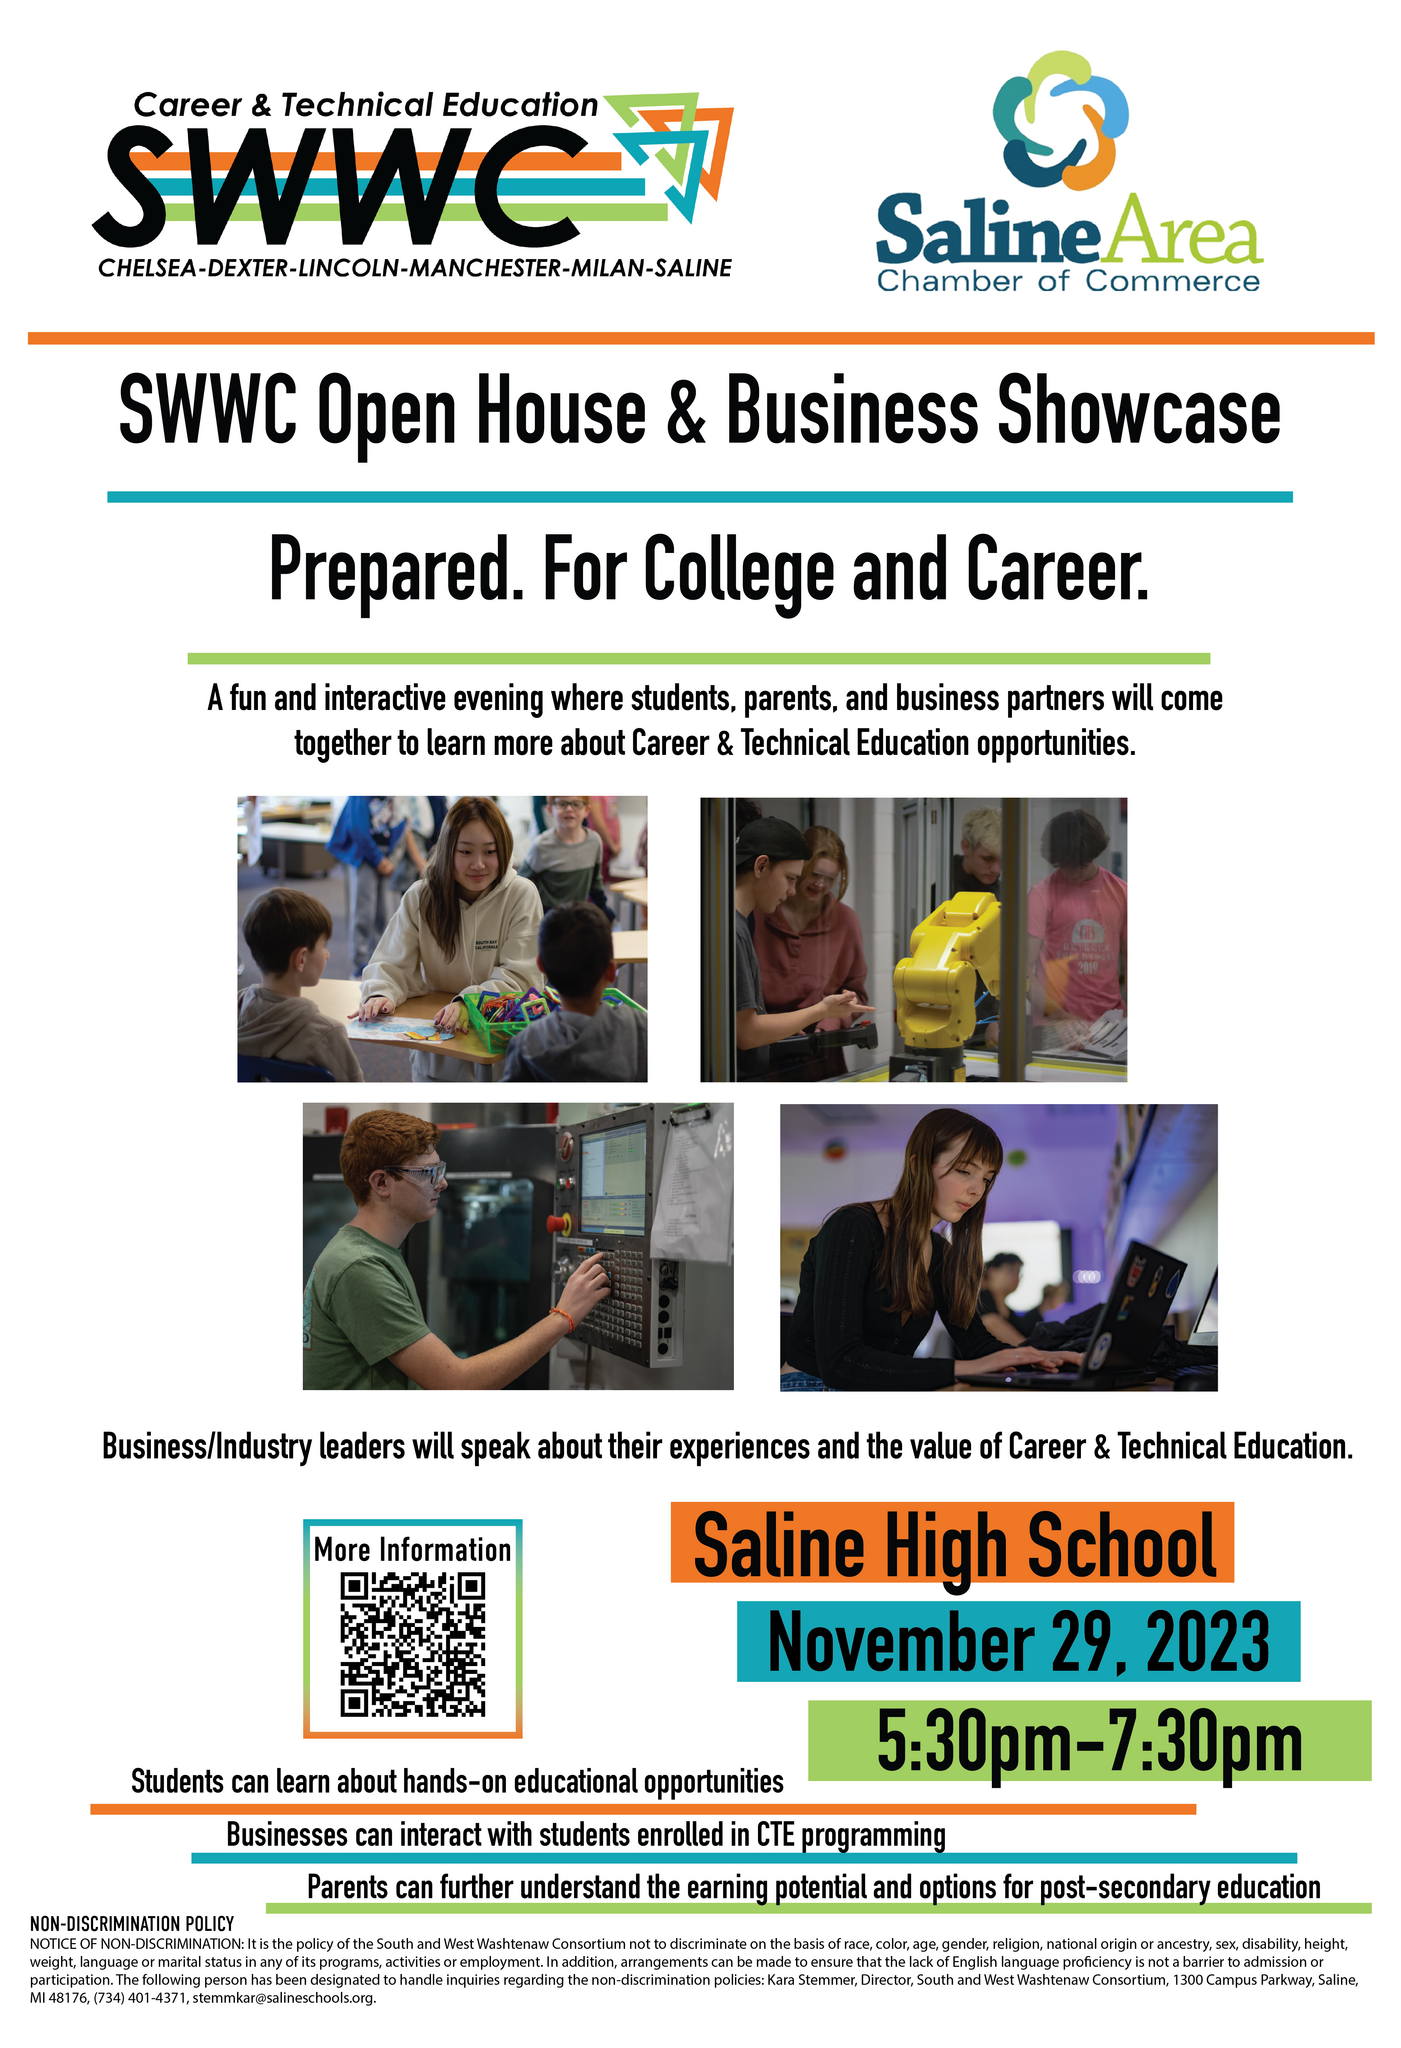 SWWC Open House & Business Showcase. November 29, 2023. 5:30 - 7:30 pm